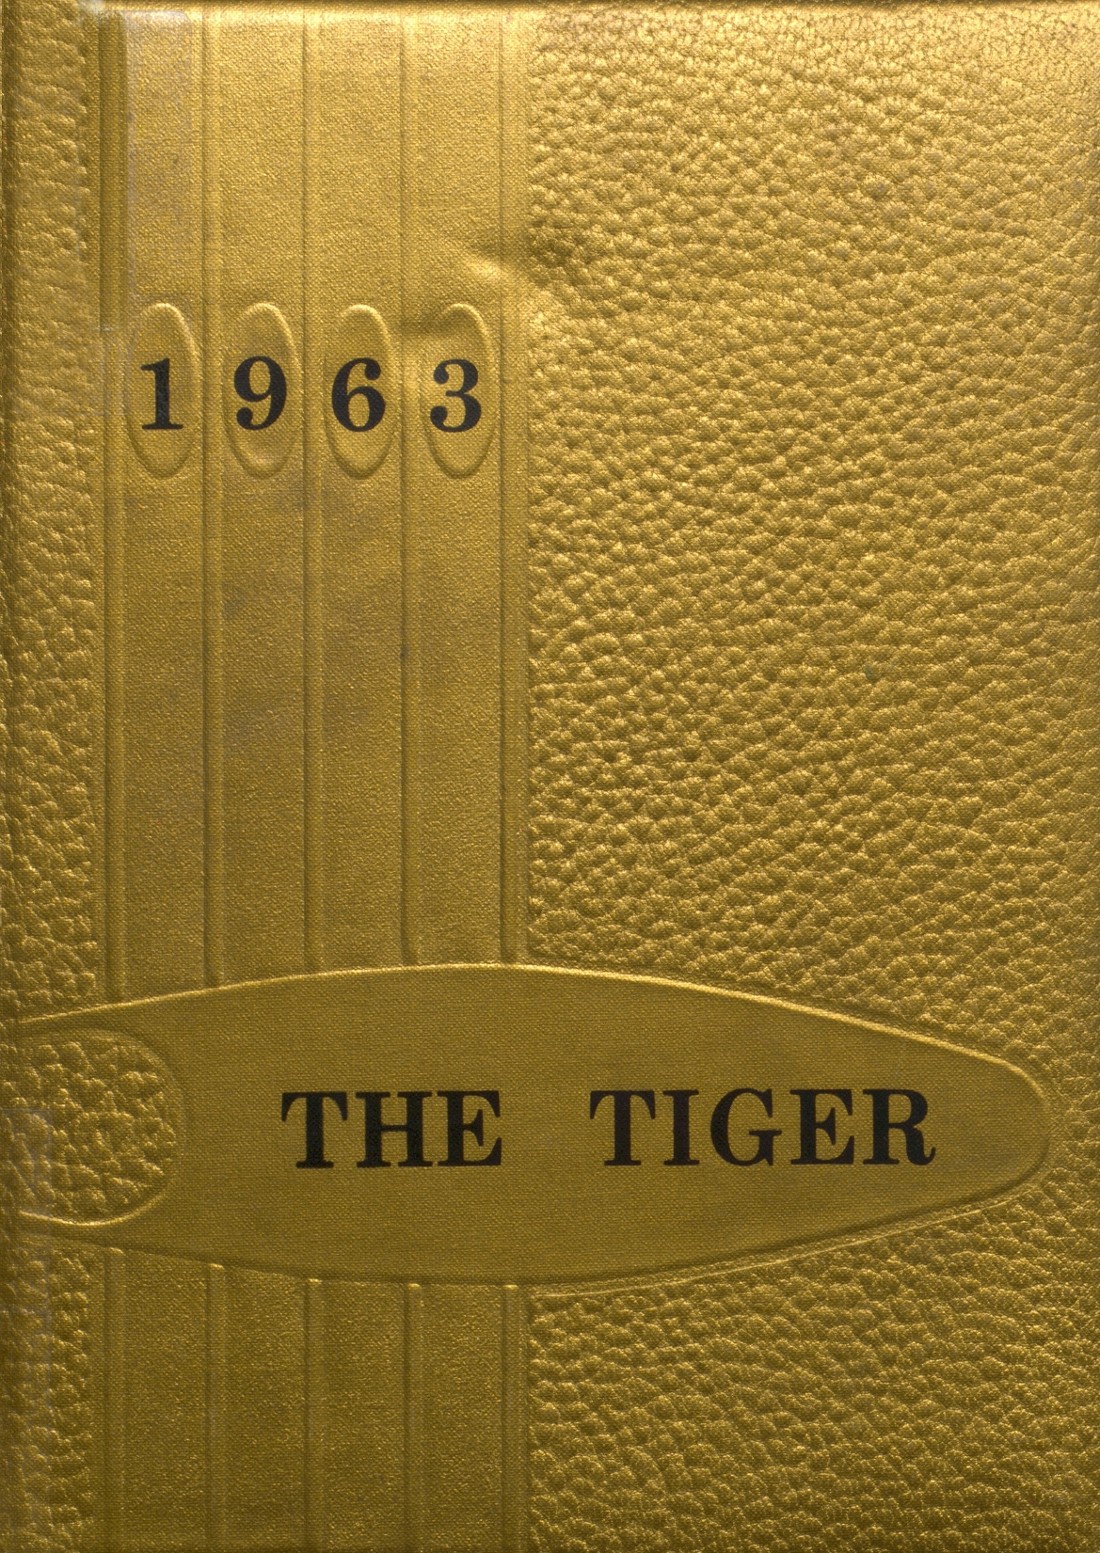 1963 yearbook from Auburn High School from Auburn, Kentucky for sale